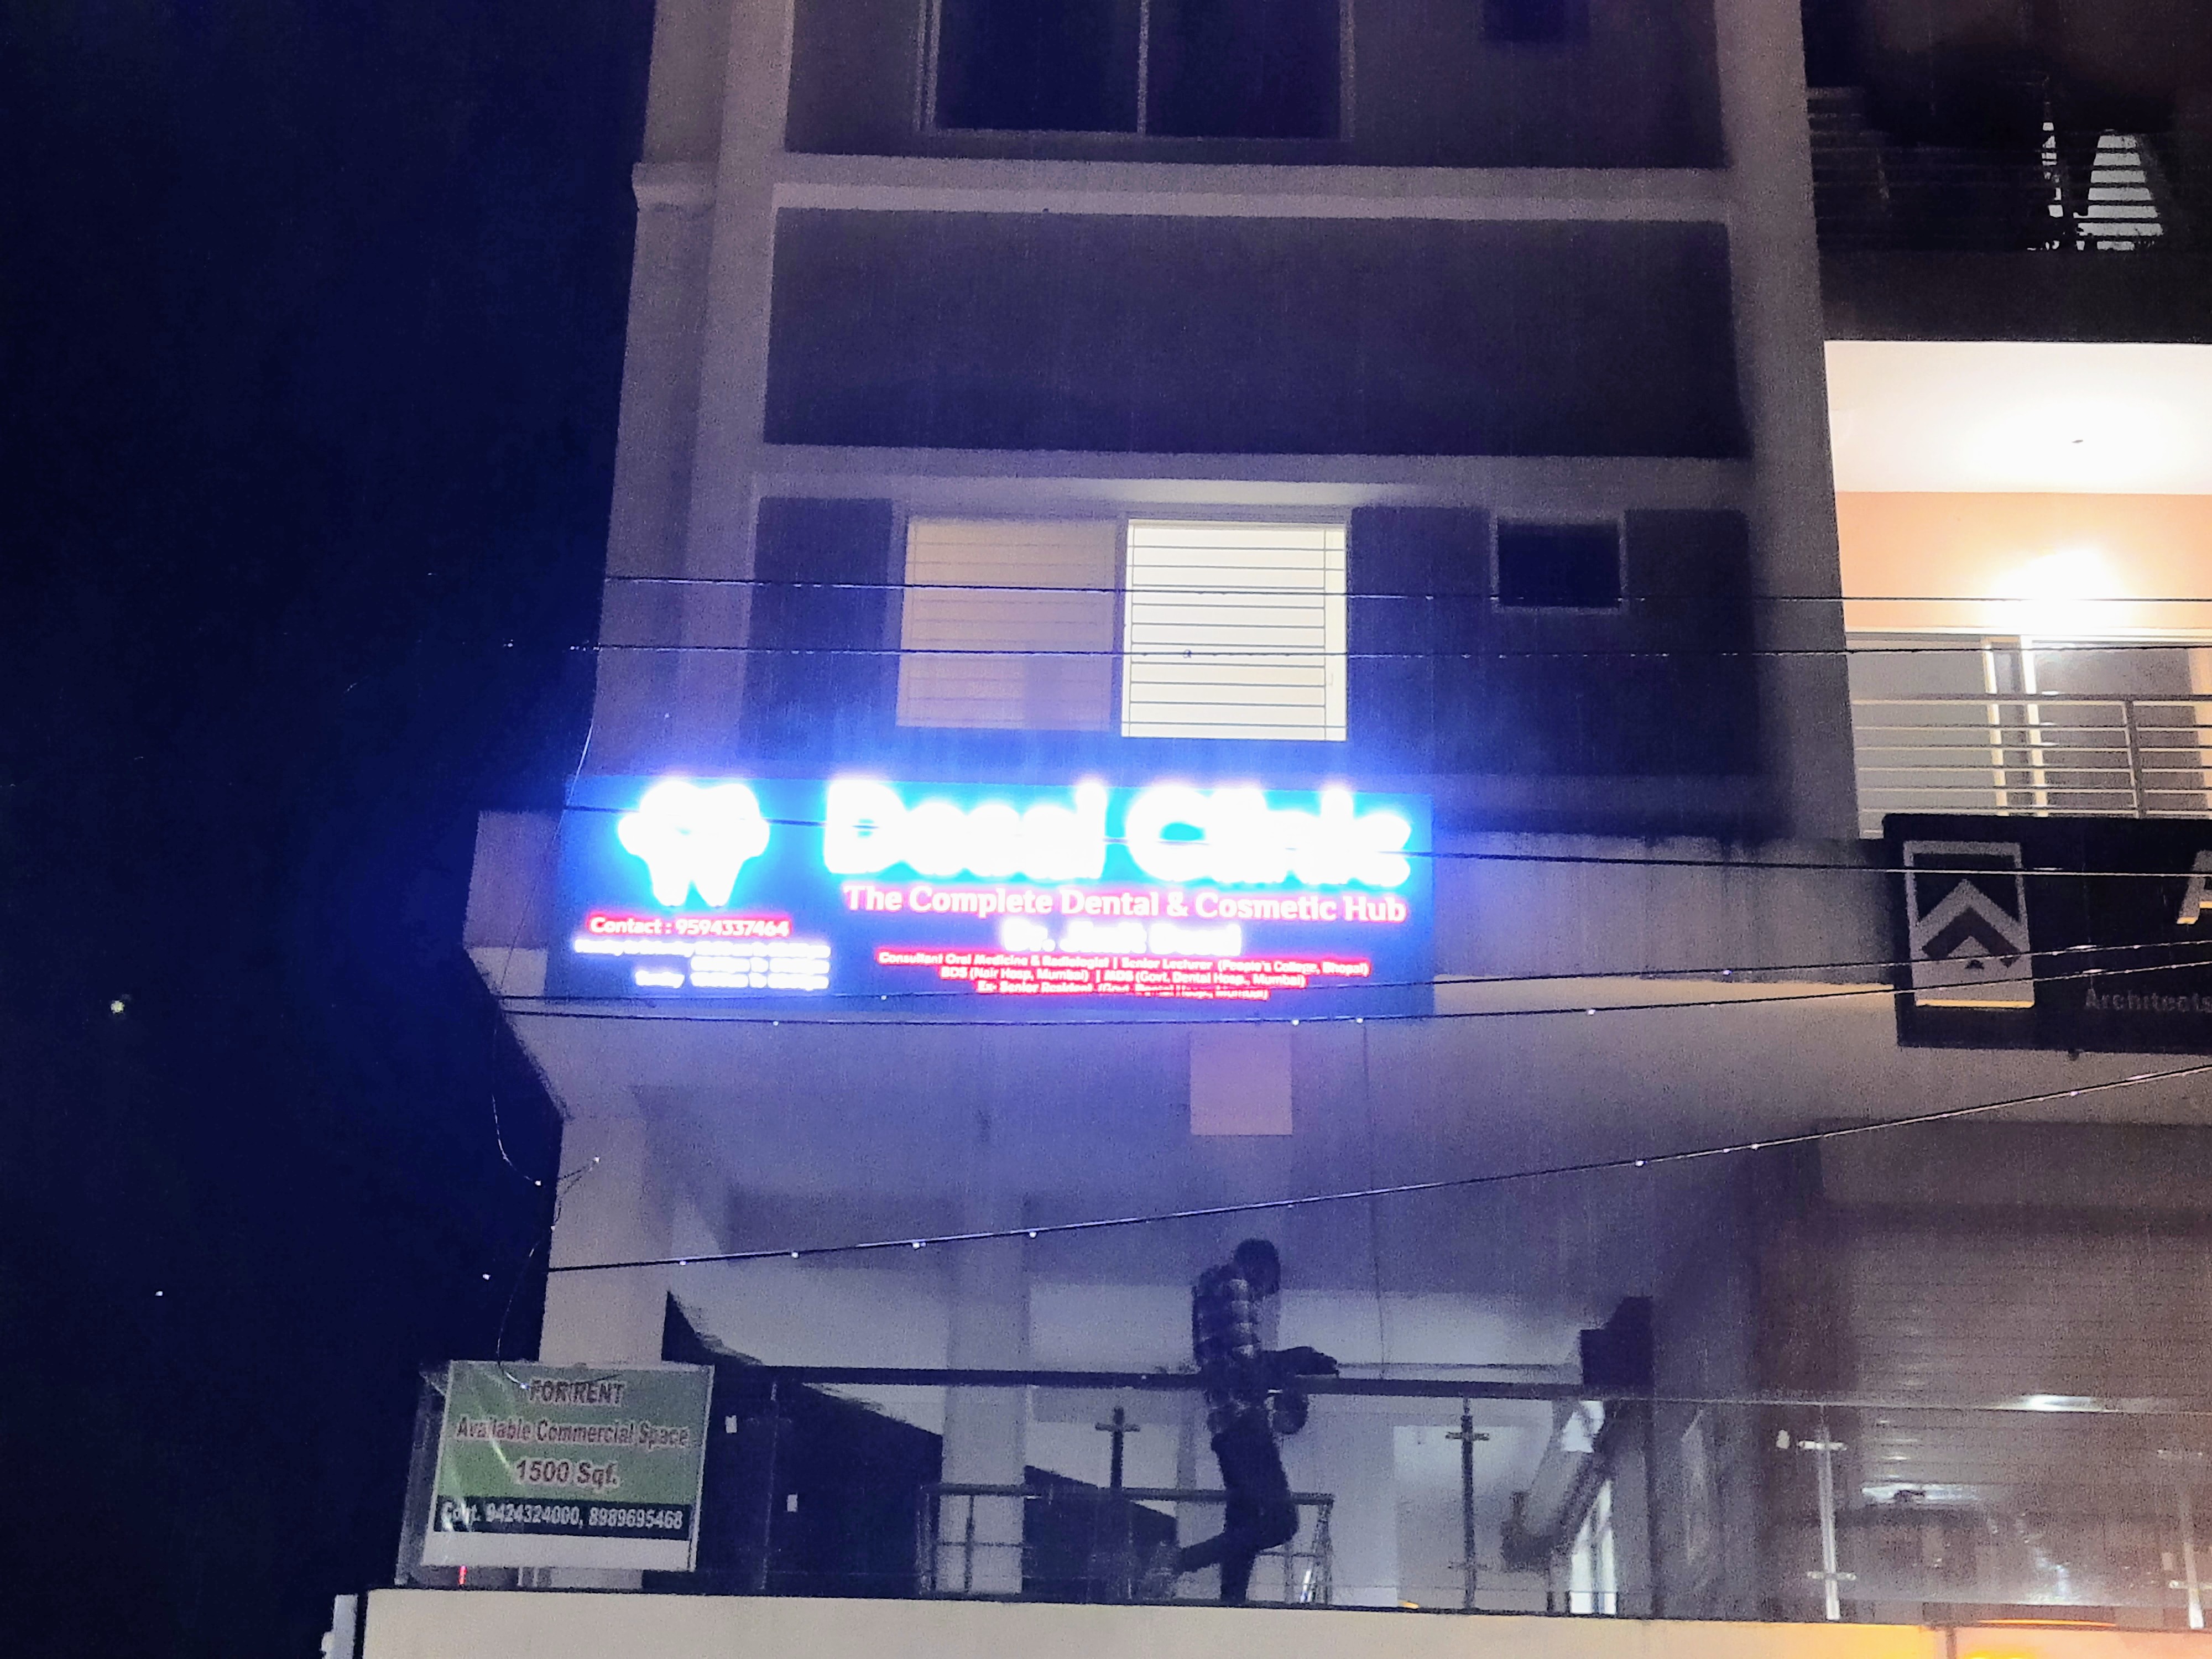 Desai Clinic